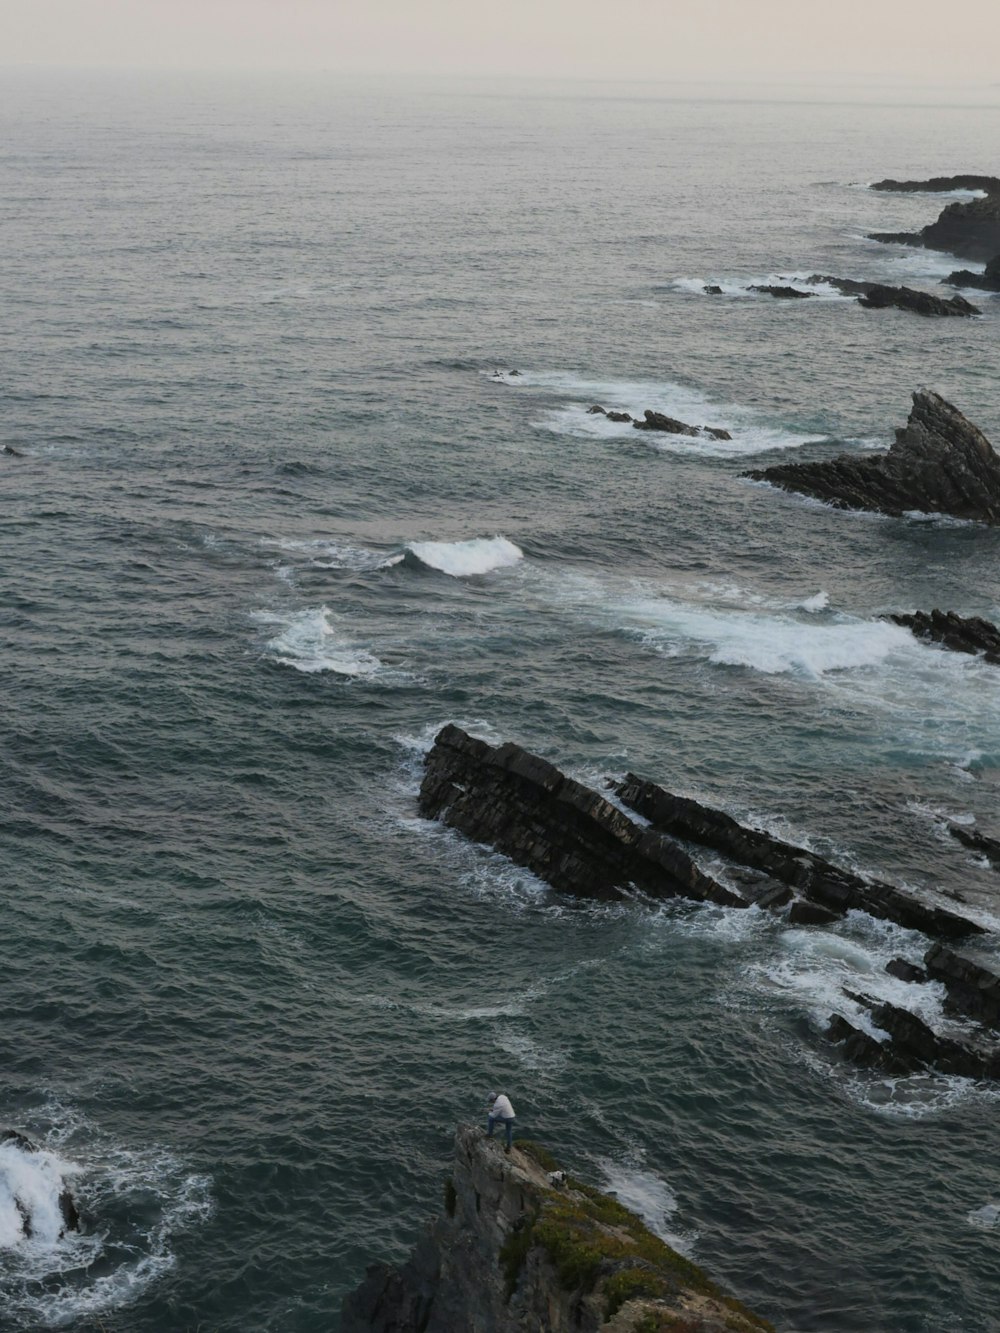 a bird sitting on a rock near the ocean